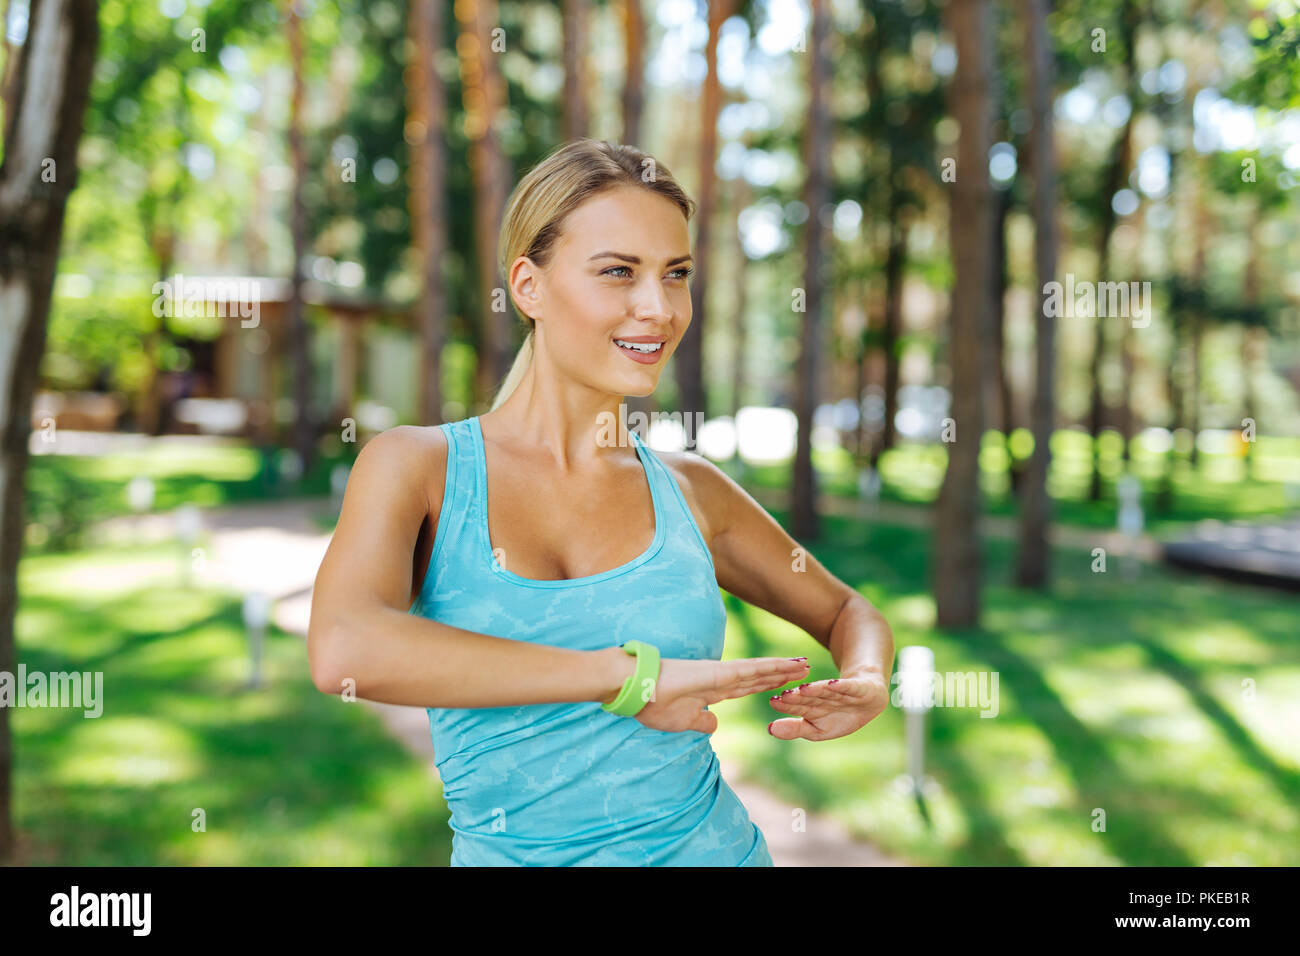 Delighted joyful fit woman enjoying doing exercises Stock Photo